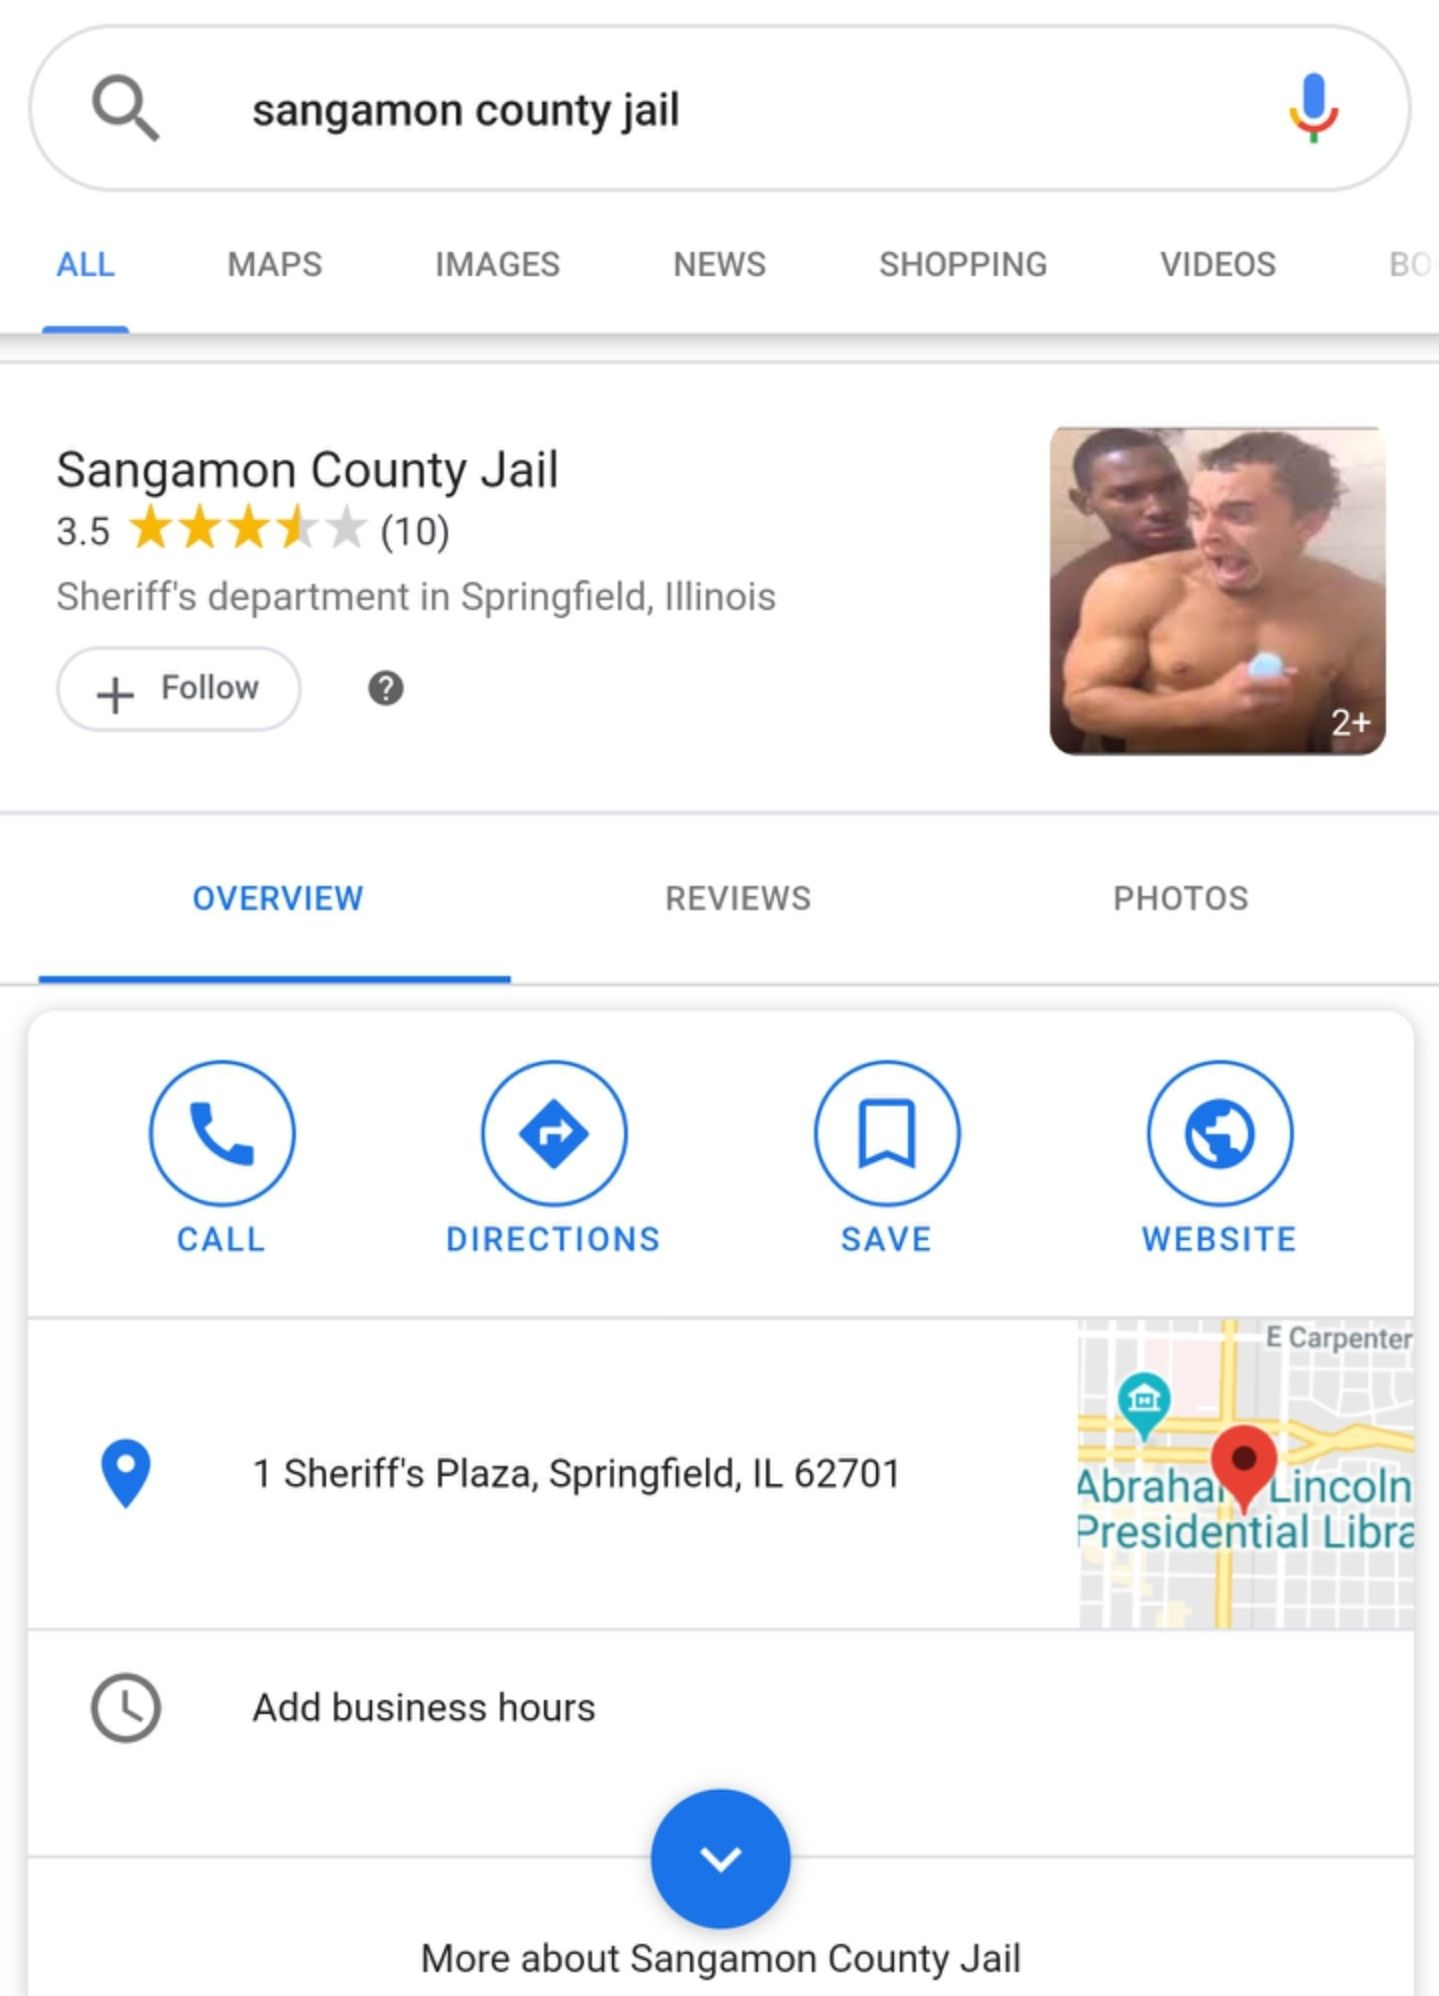 Local jail google info pic lol